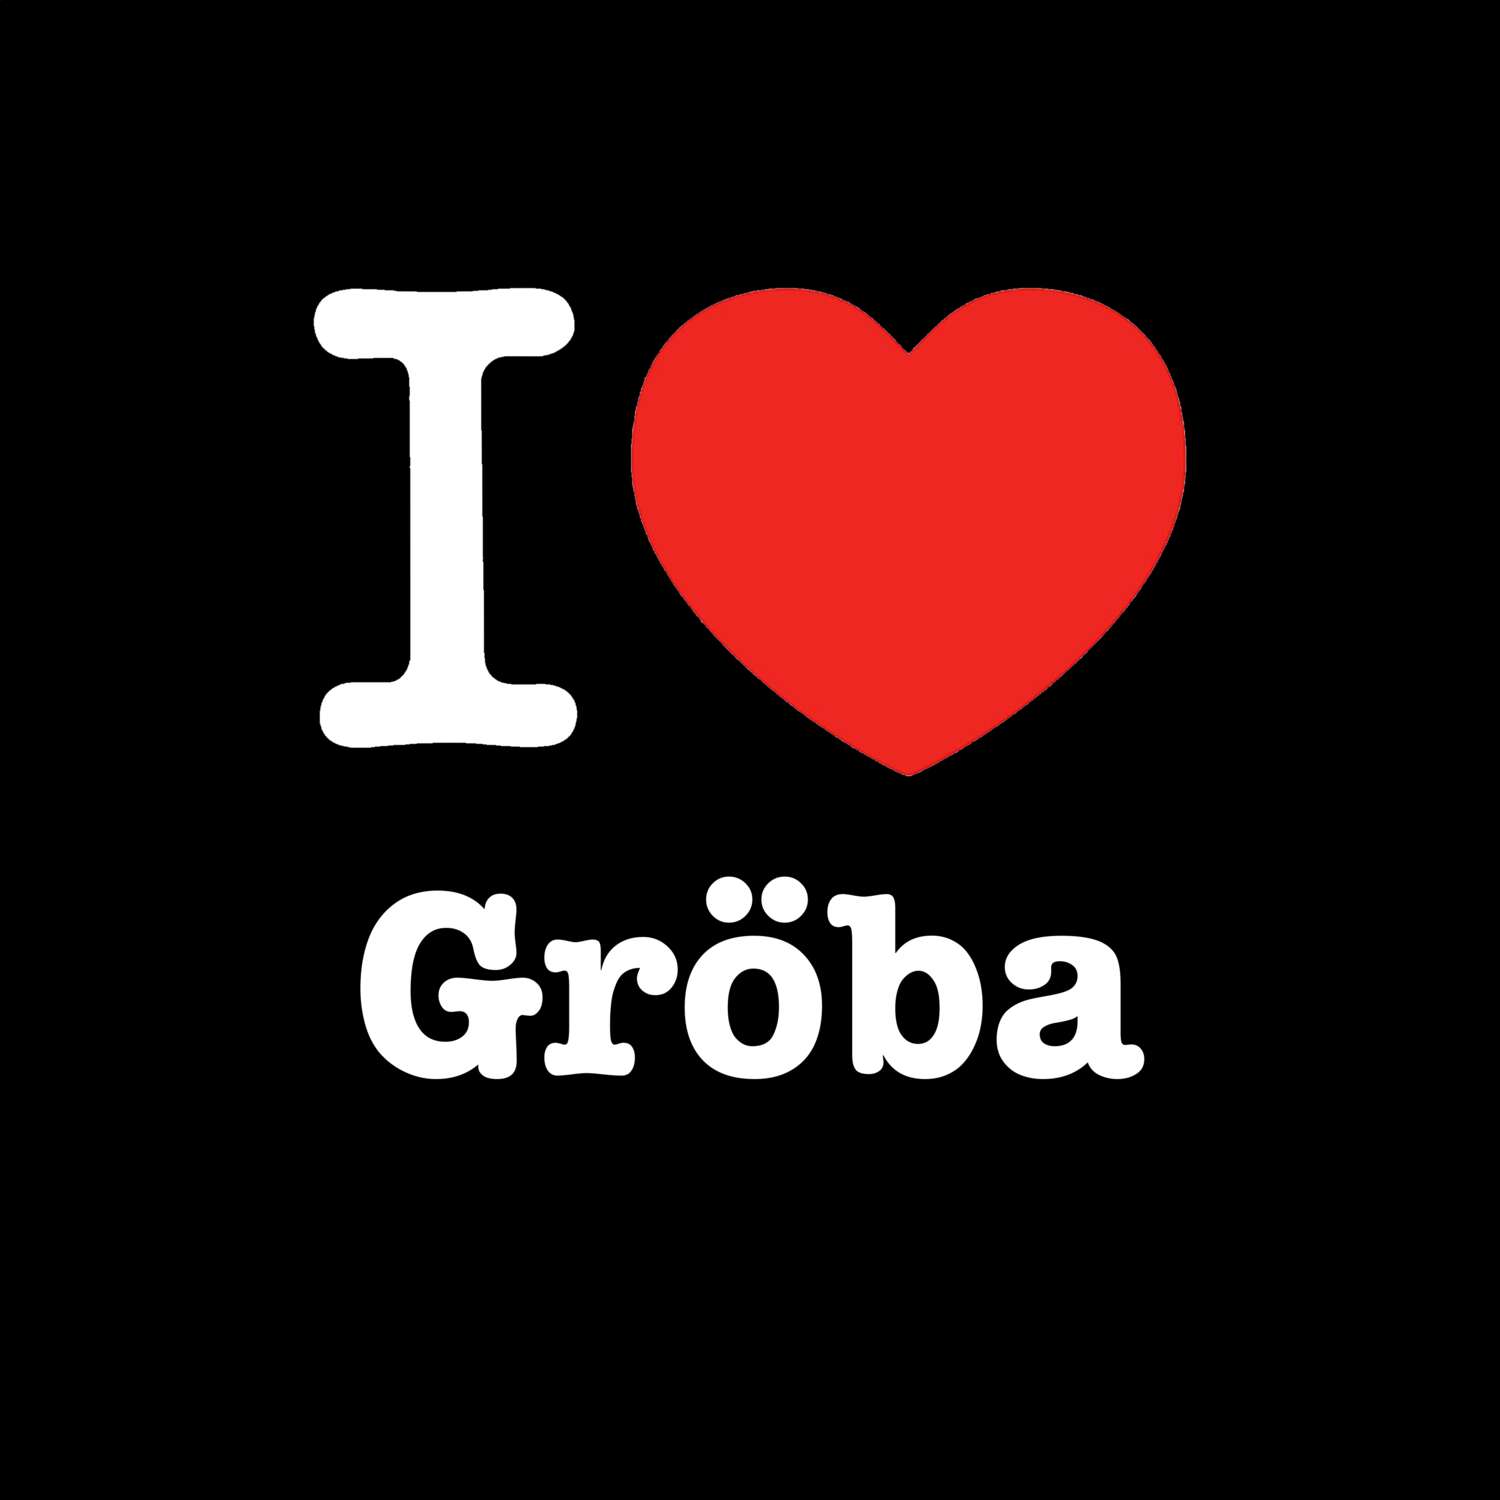 Gröba T-Shirt »I love«